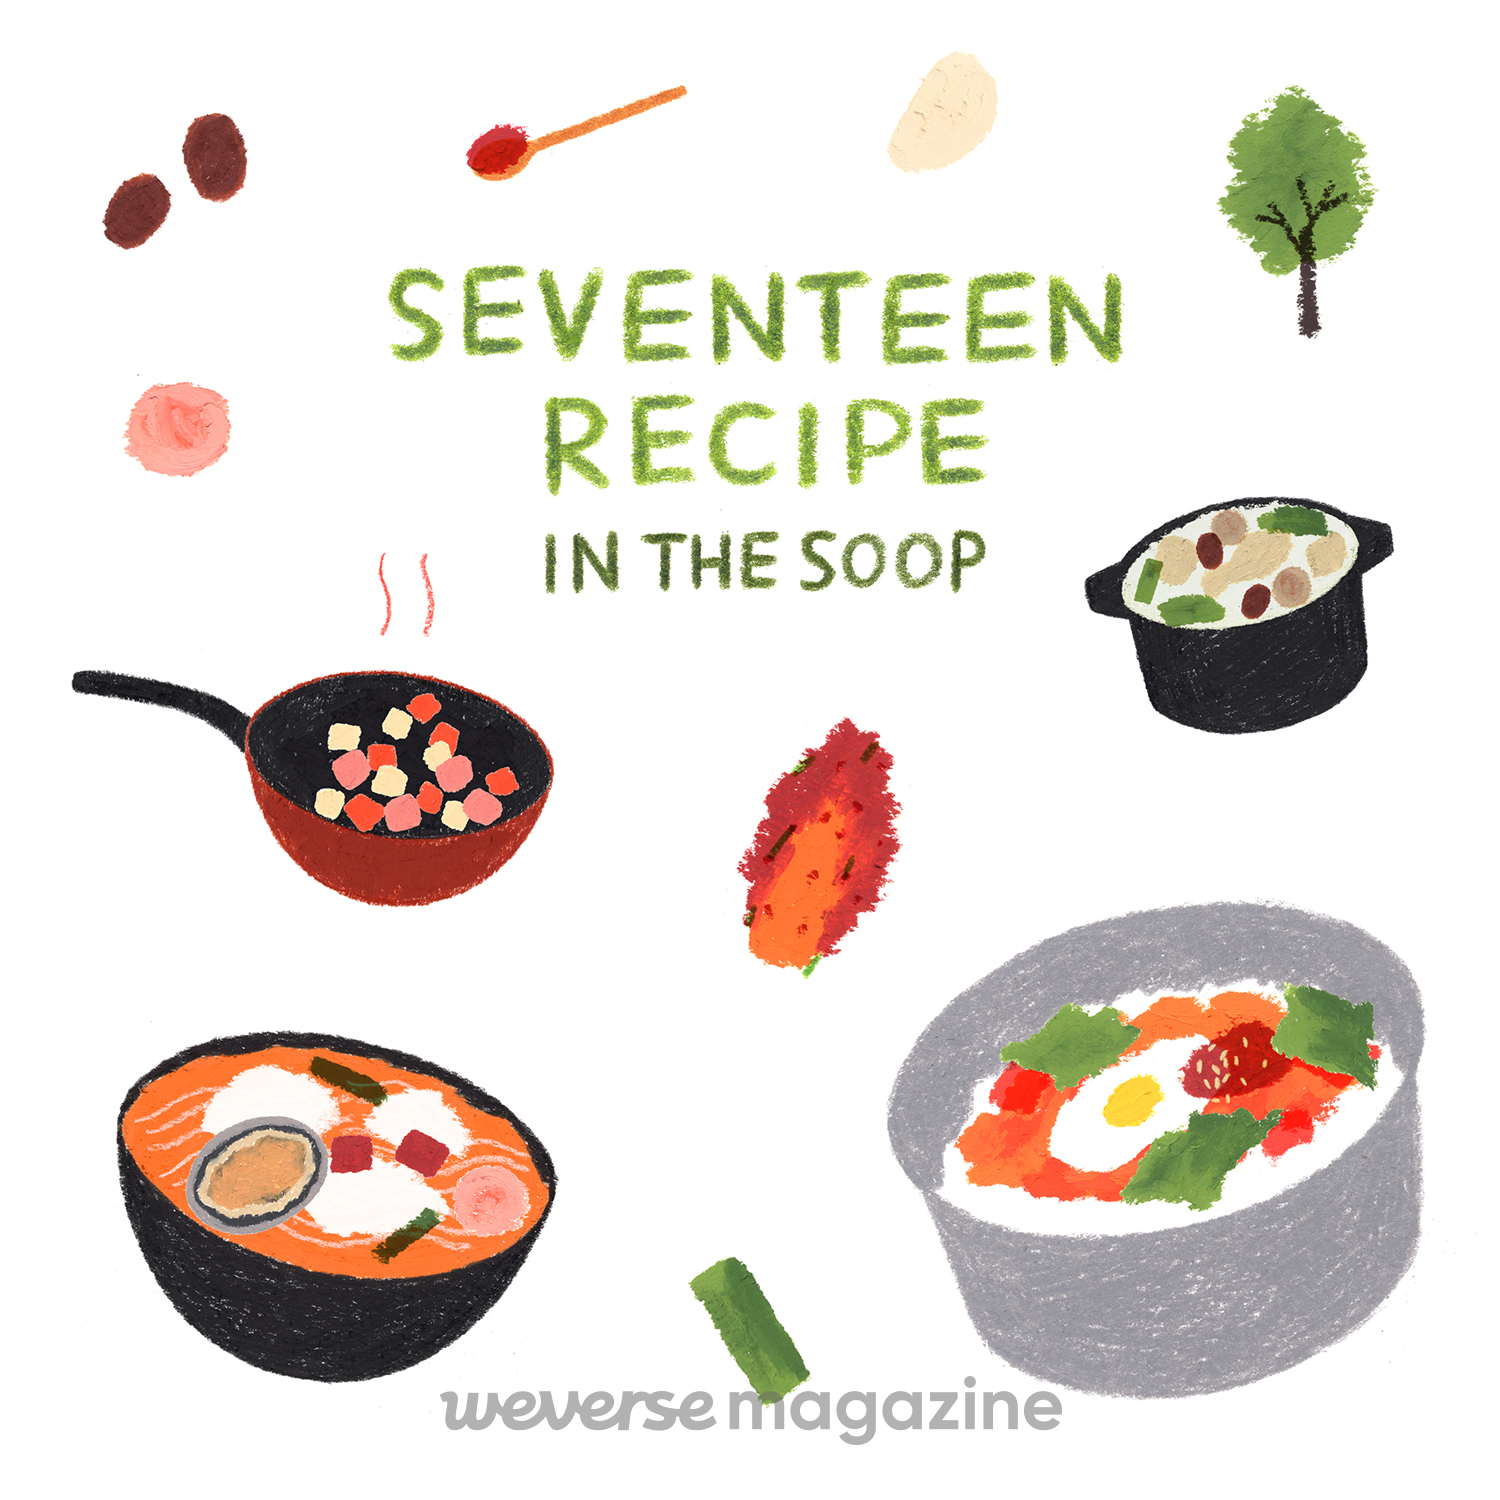 Magazine] SEVENTEEN RECIPE IN THE SOOP